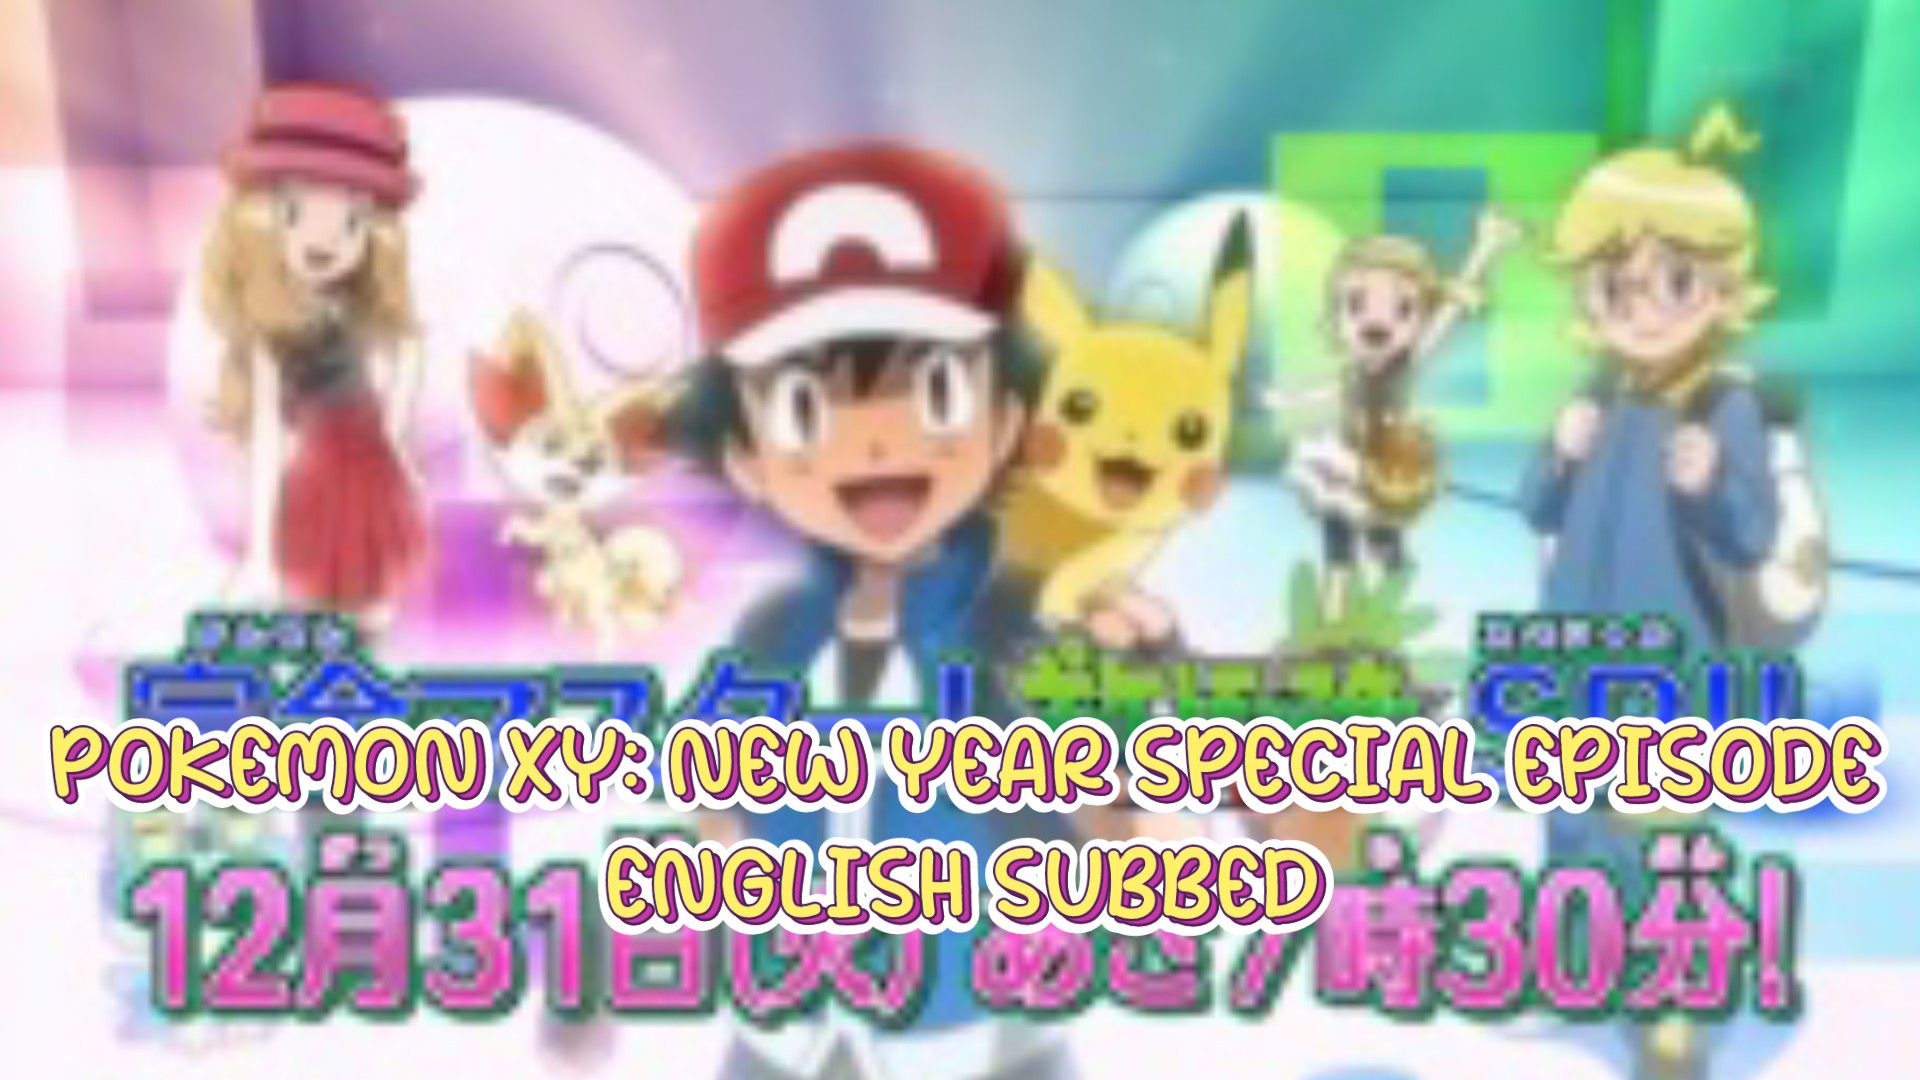 Pokémon XY - Especial ganha vídeo promocional! - AnimeNew